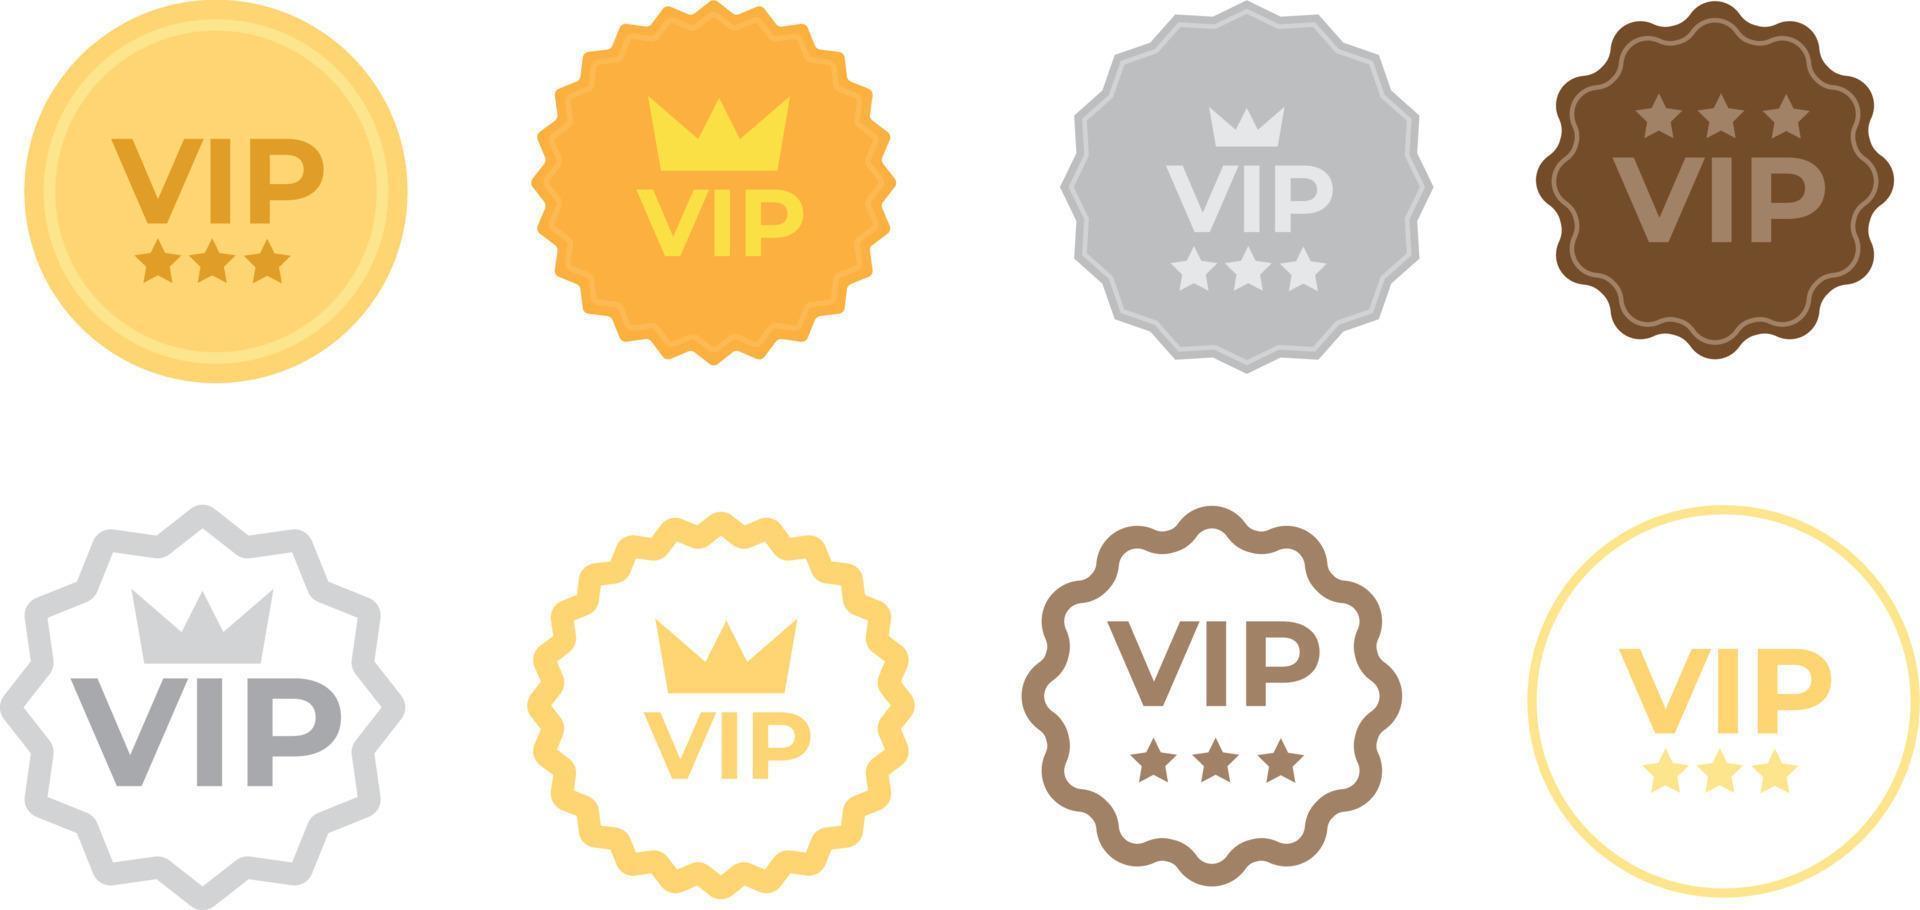 establecer insignias vip en color oro, plata y bronce. etiqueta redonda con tres niveles vip. ilustración vectorial moderna vector